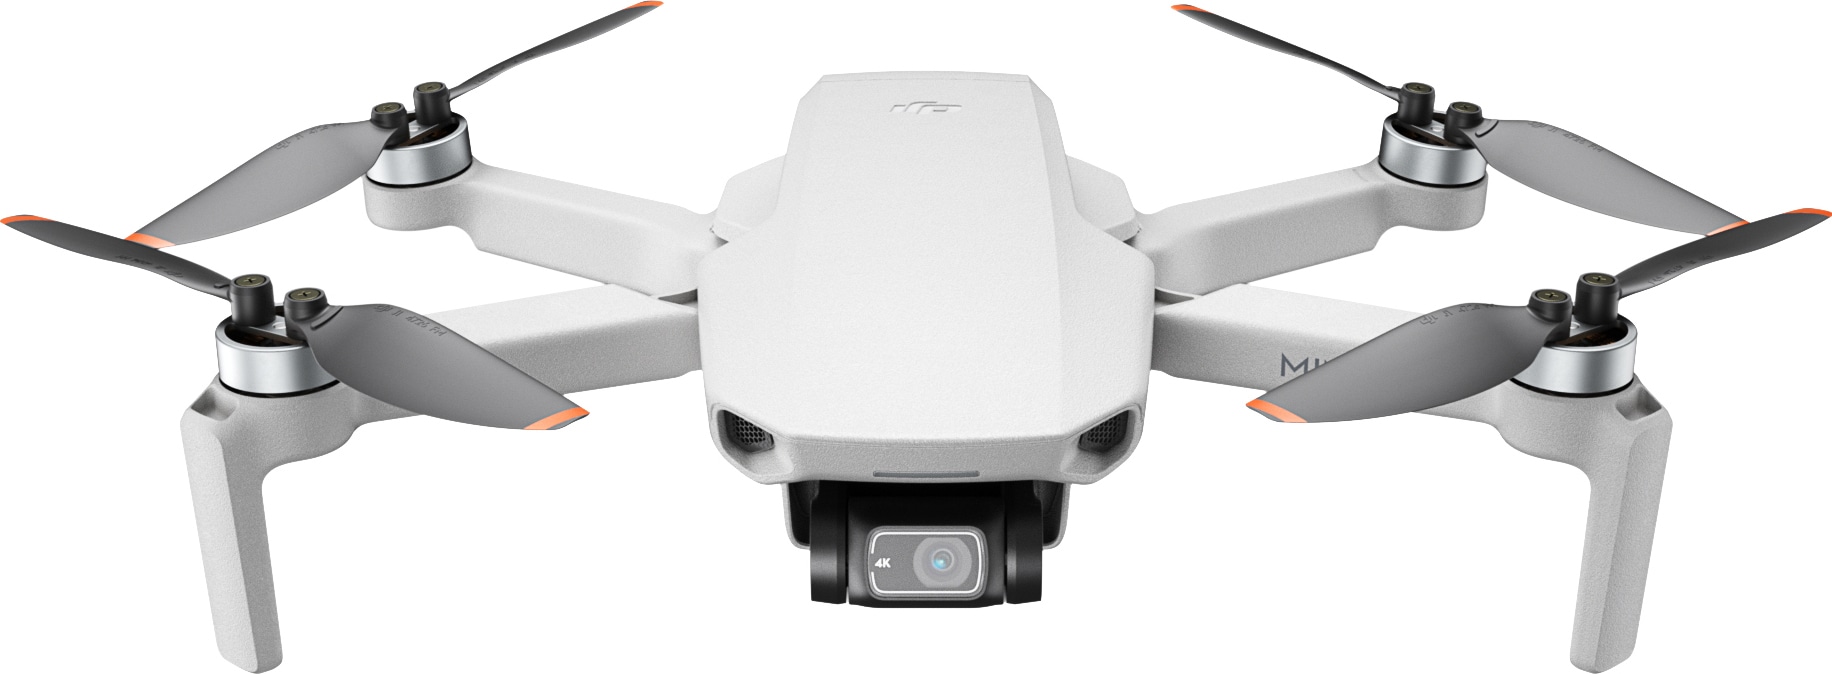 DJI Mini 2 drone - Elkjøp